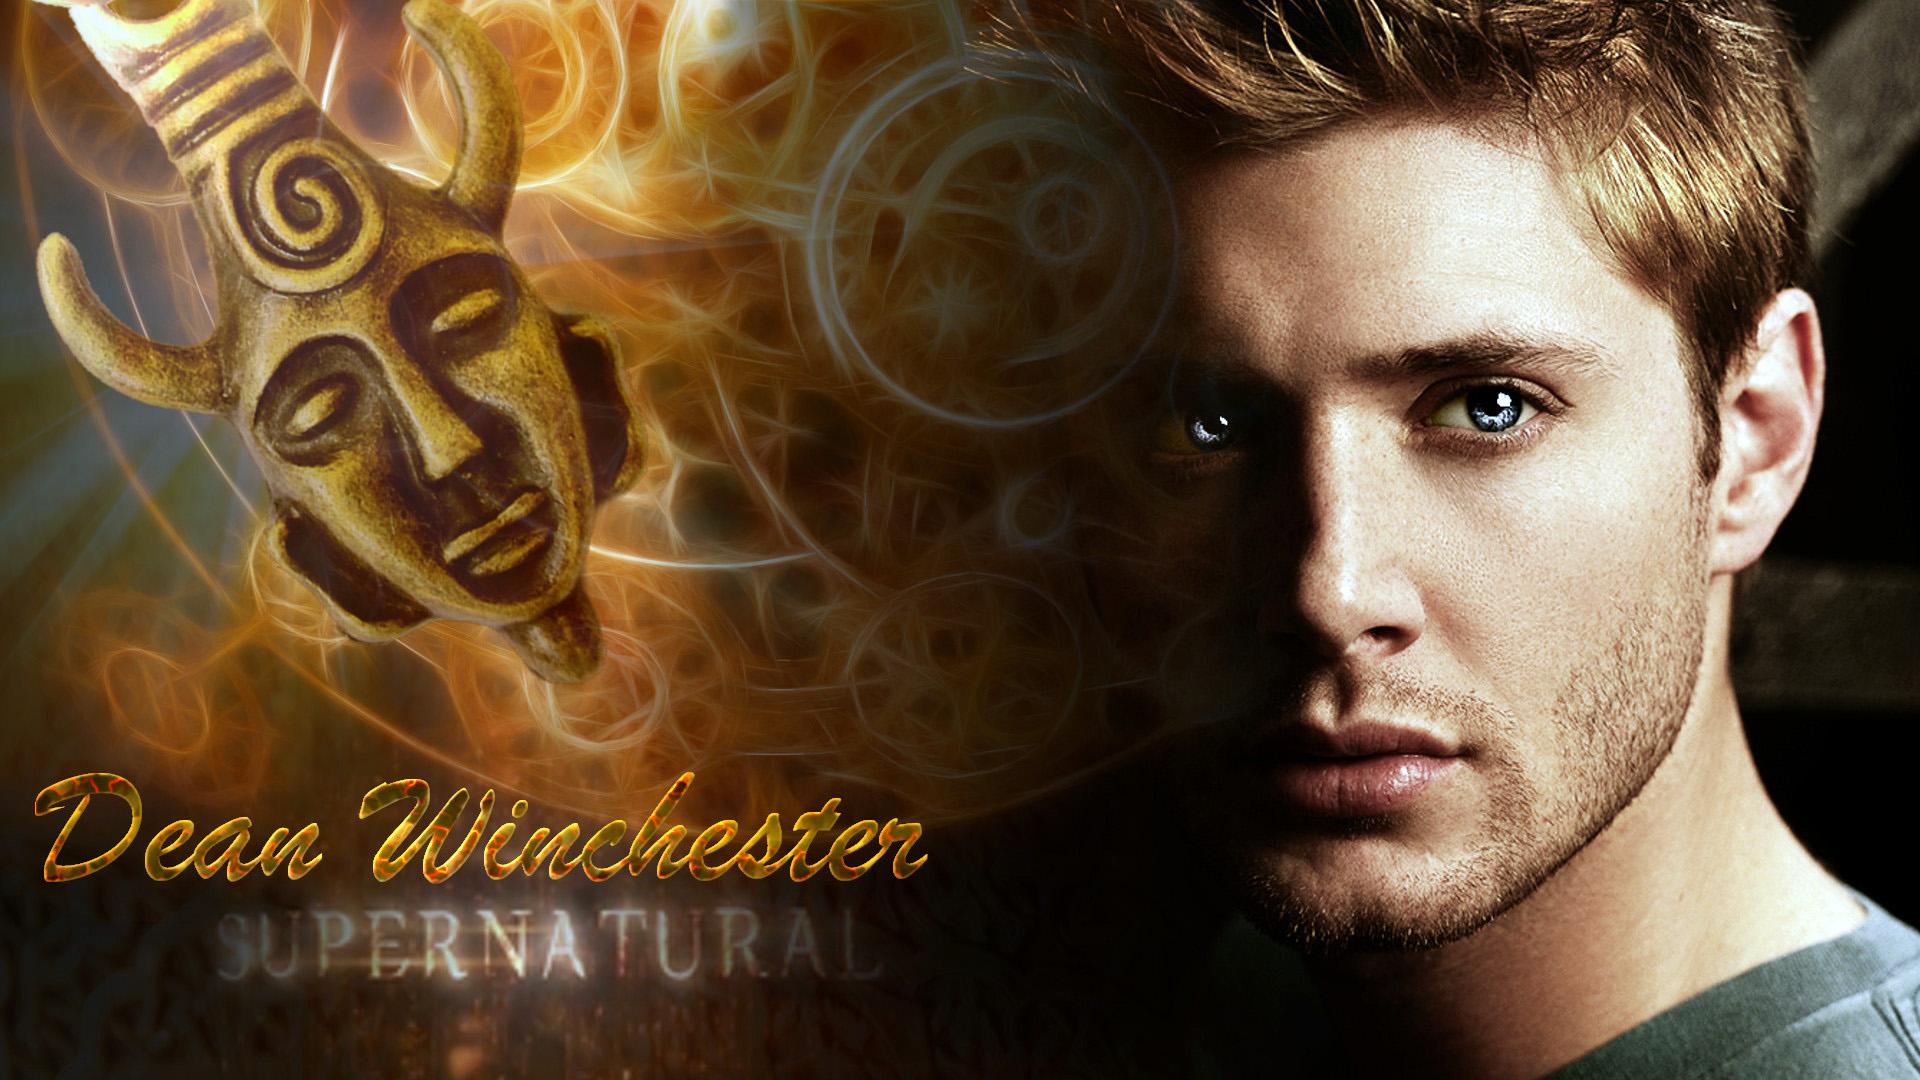 Dean Winchester Supernatural Wallpaper Uploaded On December